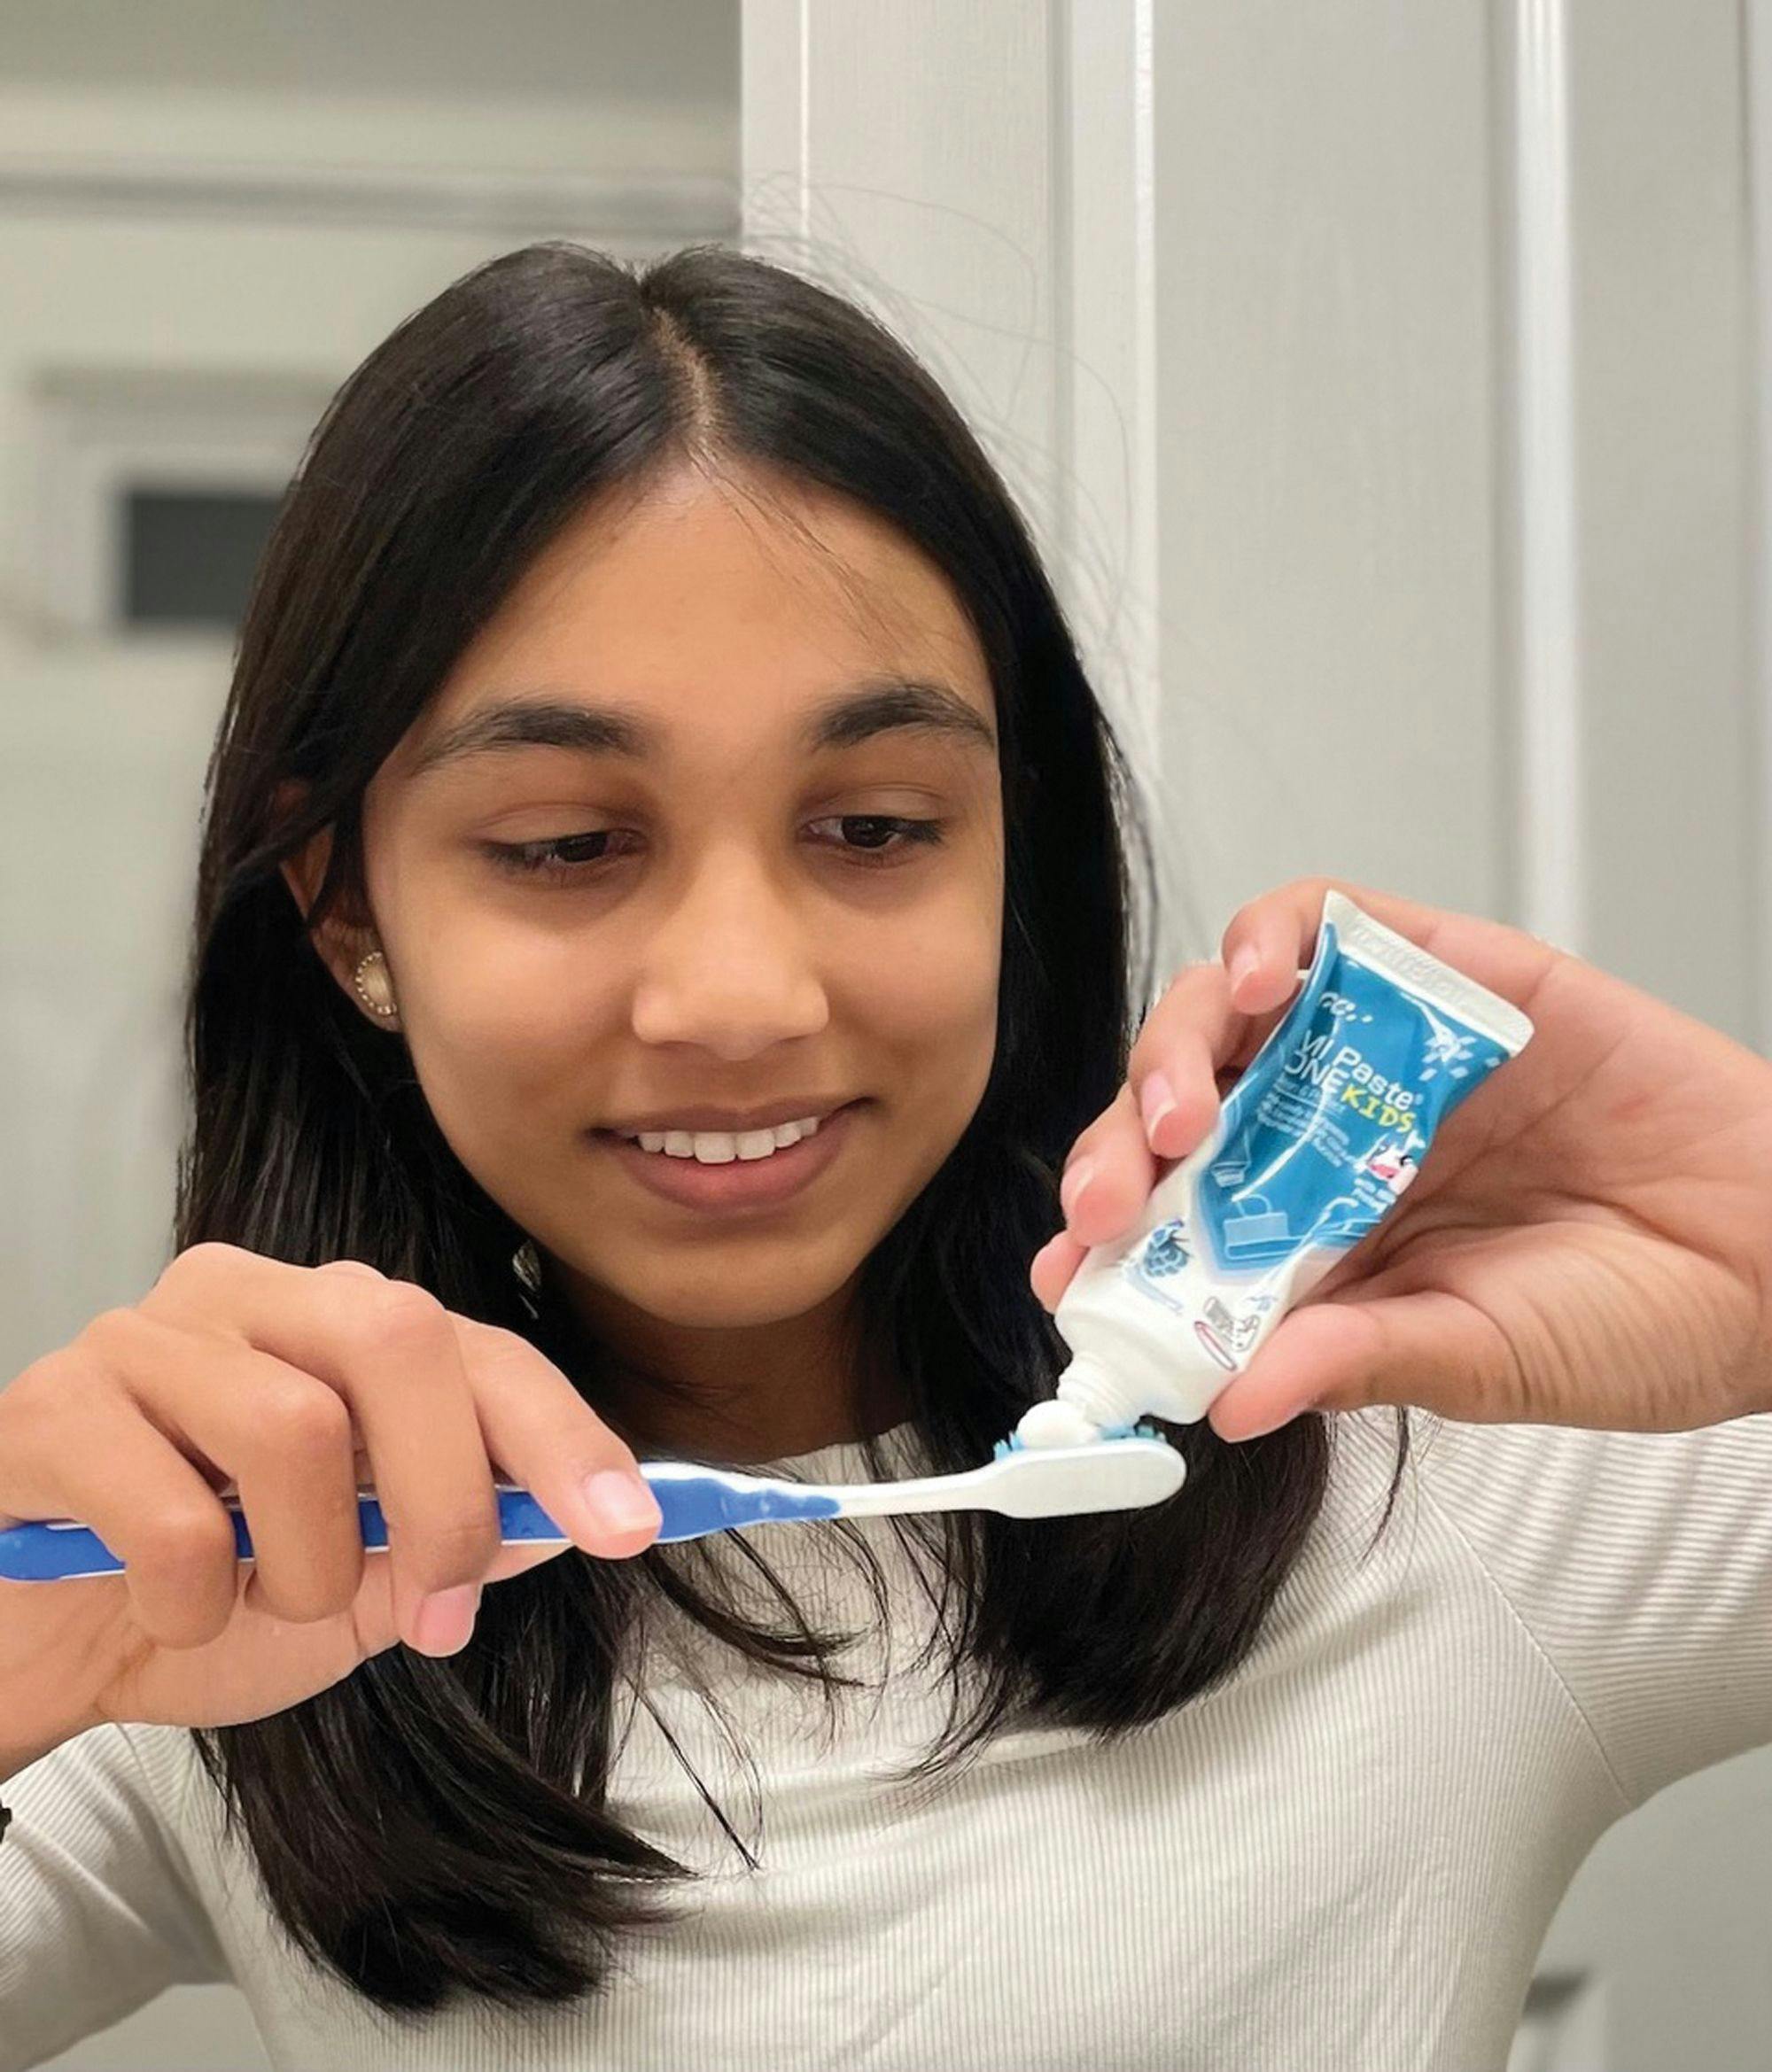 Toothpaste Tackles Tough Preventive Pediatric Care